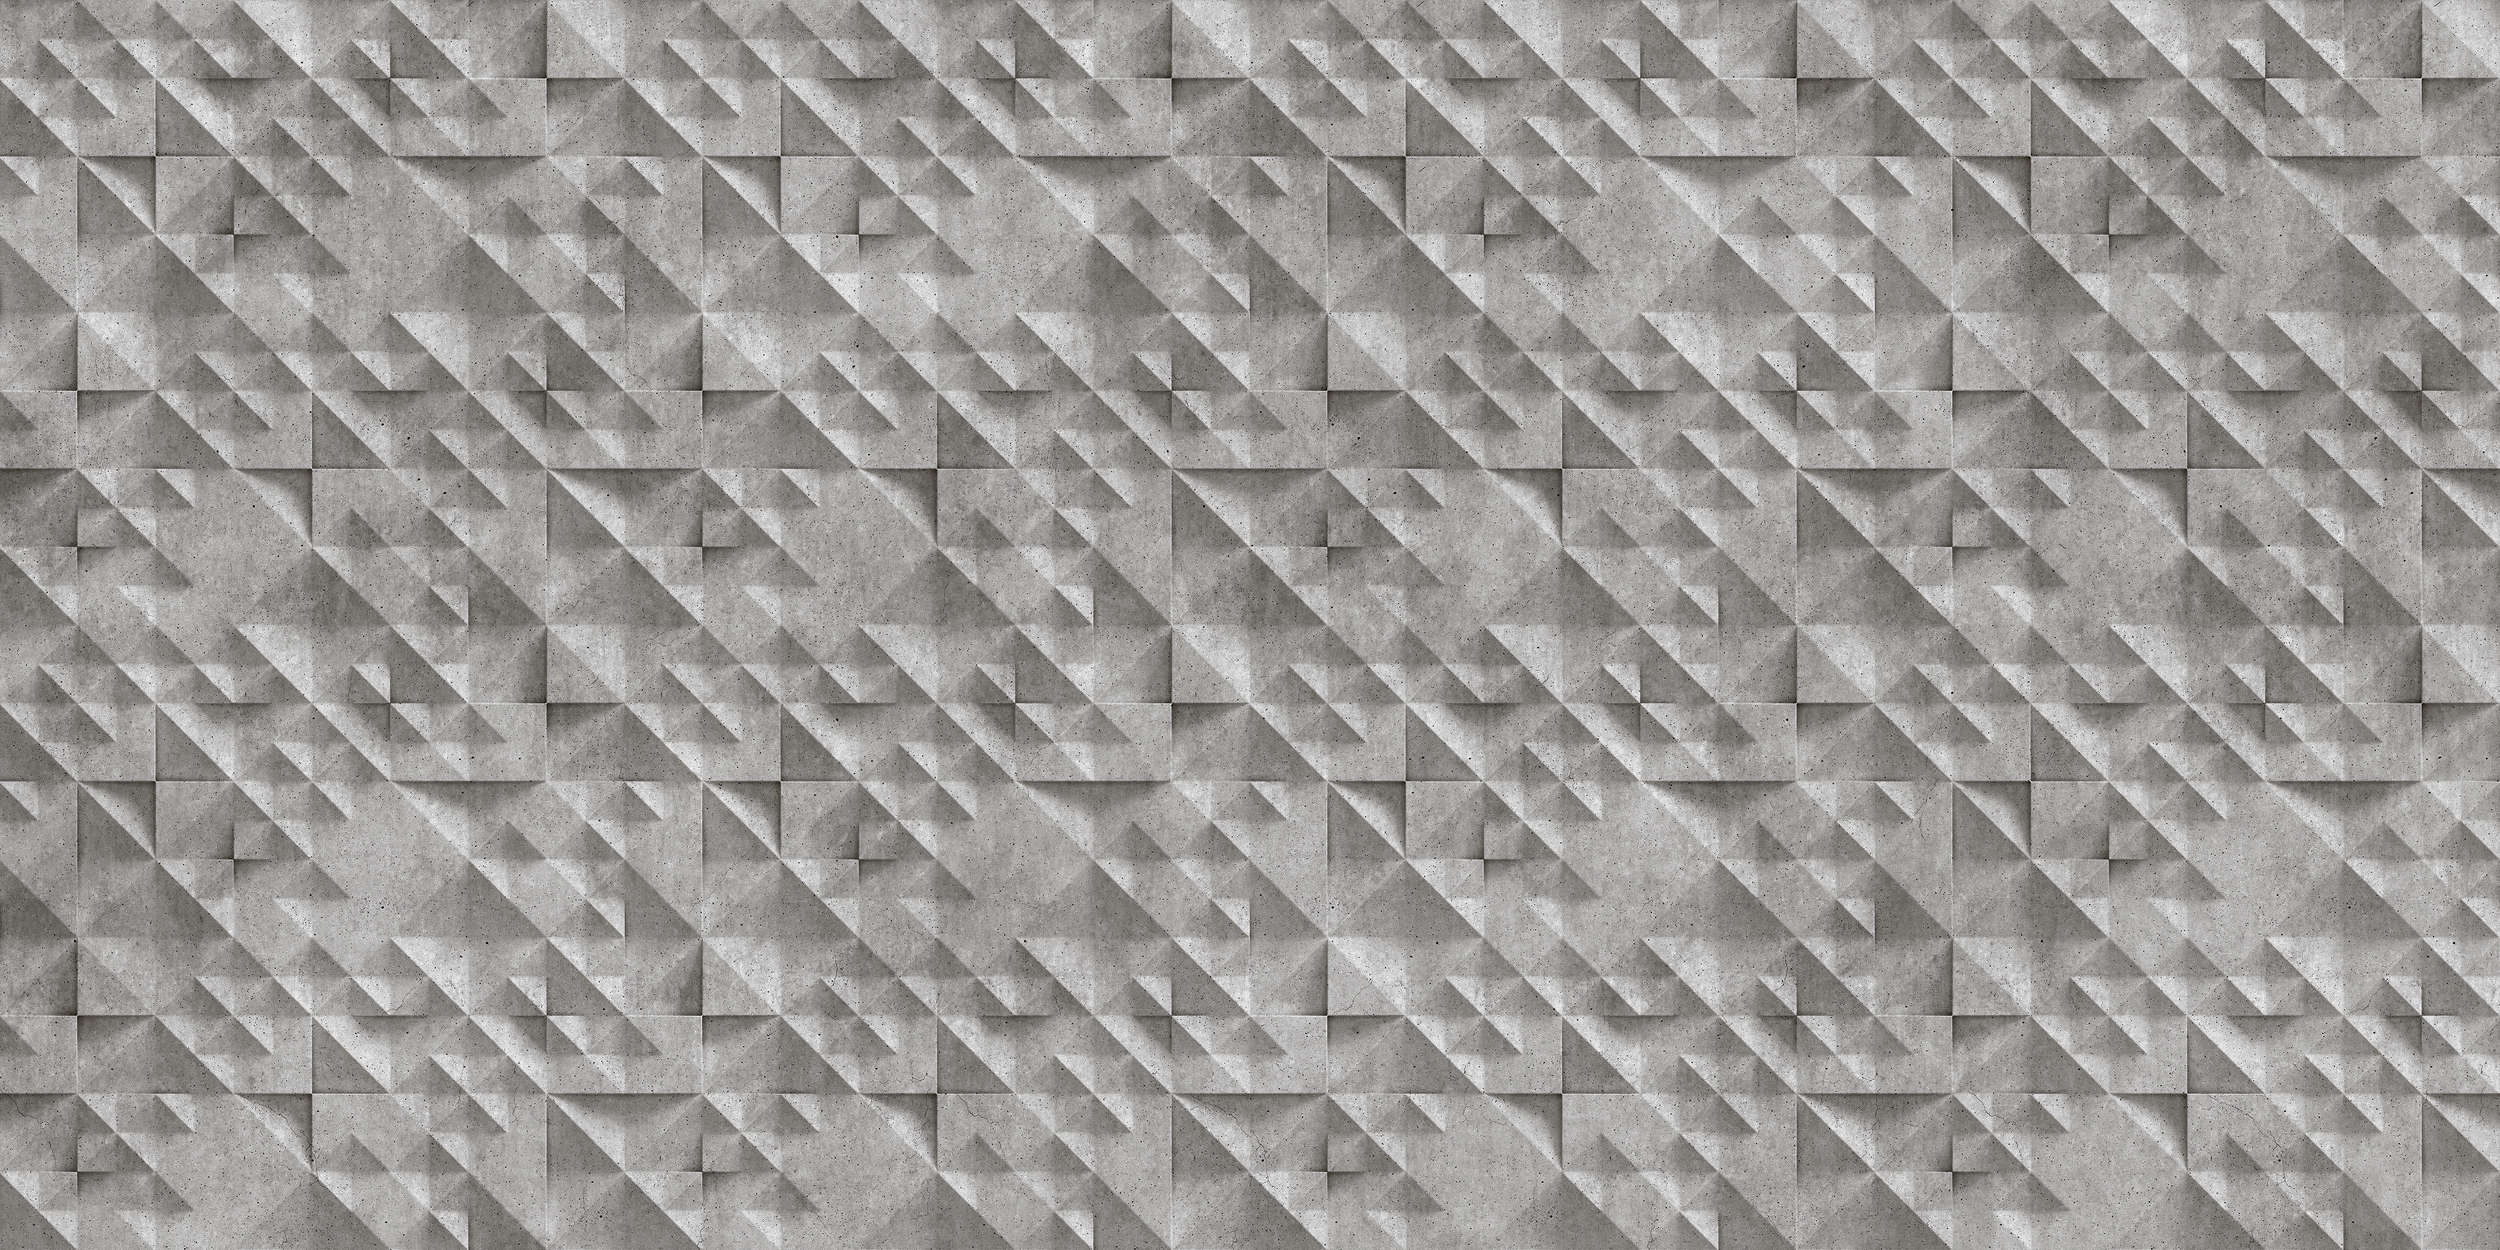             Concrete 2 - Cool 3D concrete lozenge wallpaper - Grey, Black | Matt smooth fleece
        